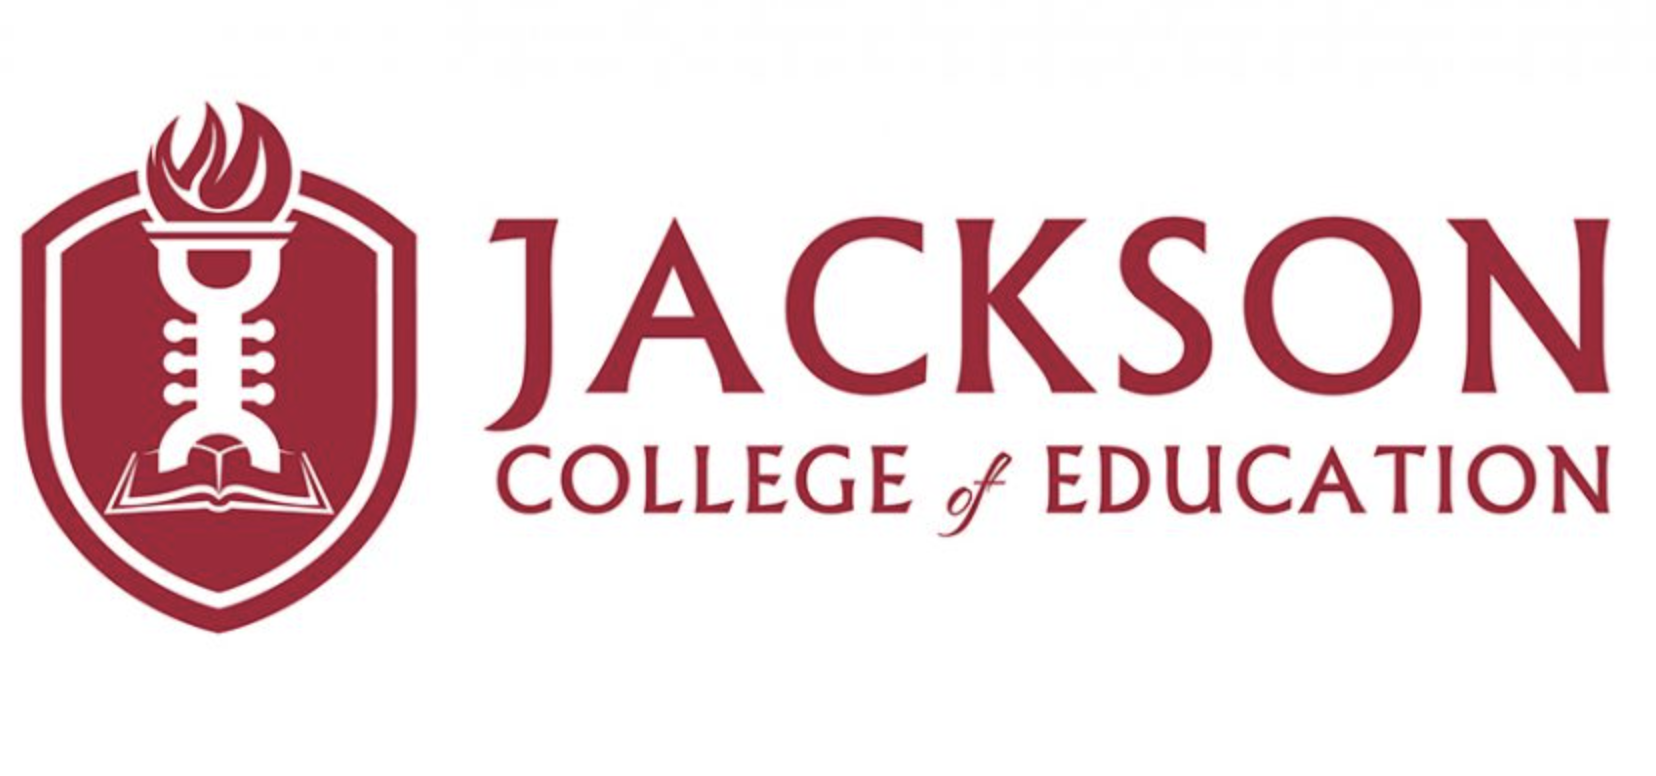 Jackson College Of Education Student Portal